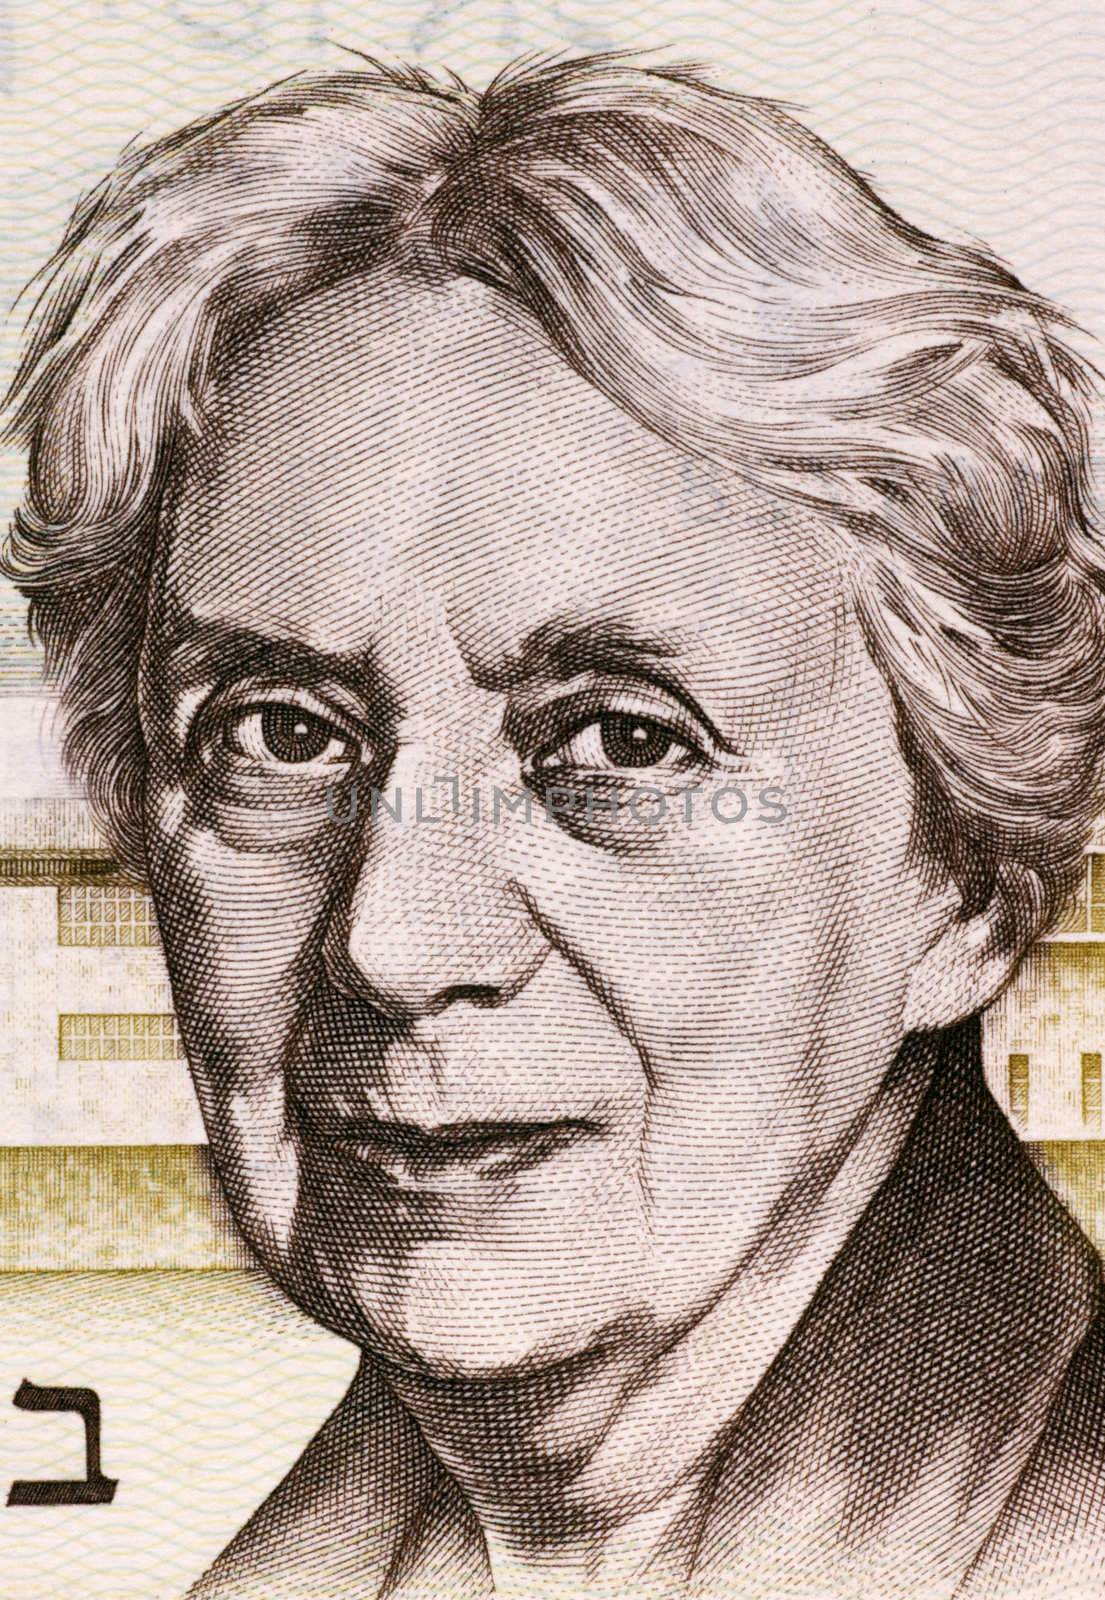 Henrietta Szold (1860-1945) on 5 Lirot 1973 Banknote from Israel. U.S. Jewish Zionist leader and founder of the Hadassah Women's Organization.